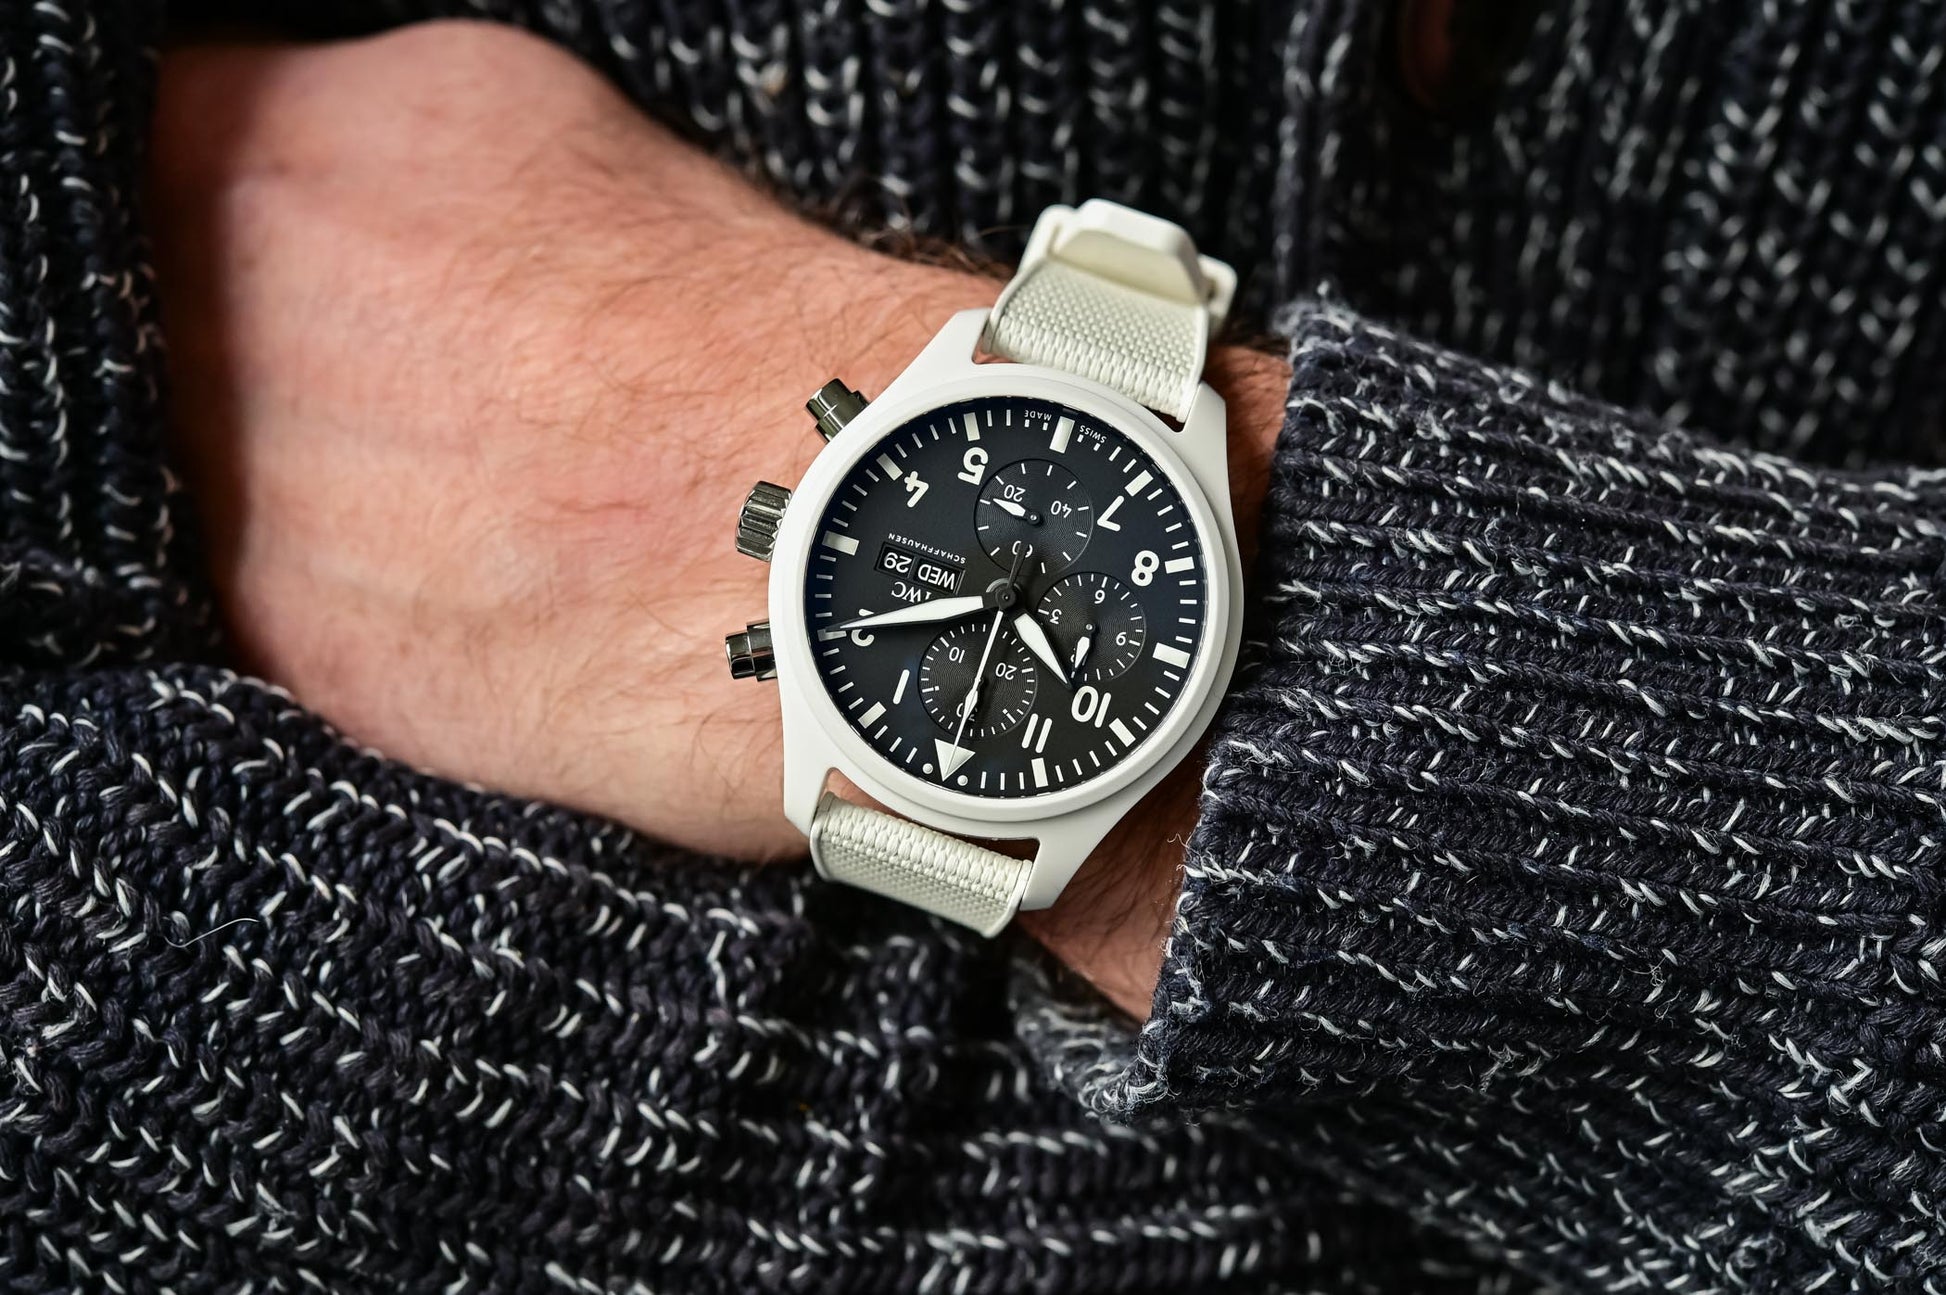 IWC Pilot's Watch Chronograph Top Gun Edition 'Lake Tahoe' Black Dial White Leather Strap Watch for Men - IW389105